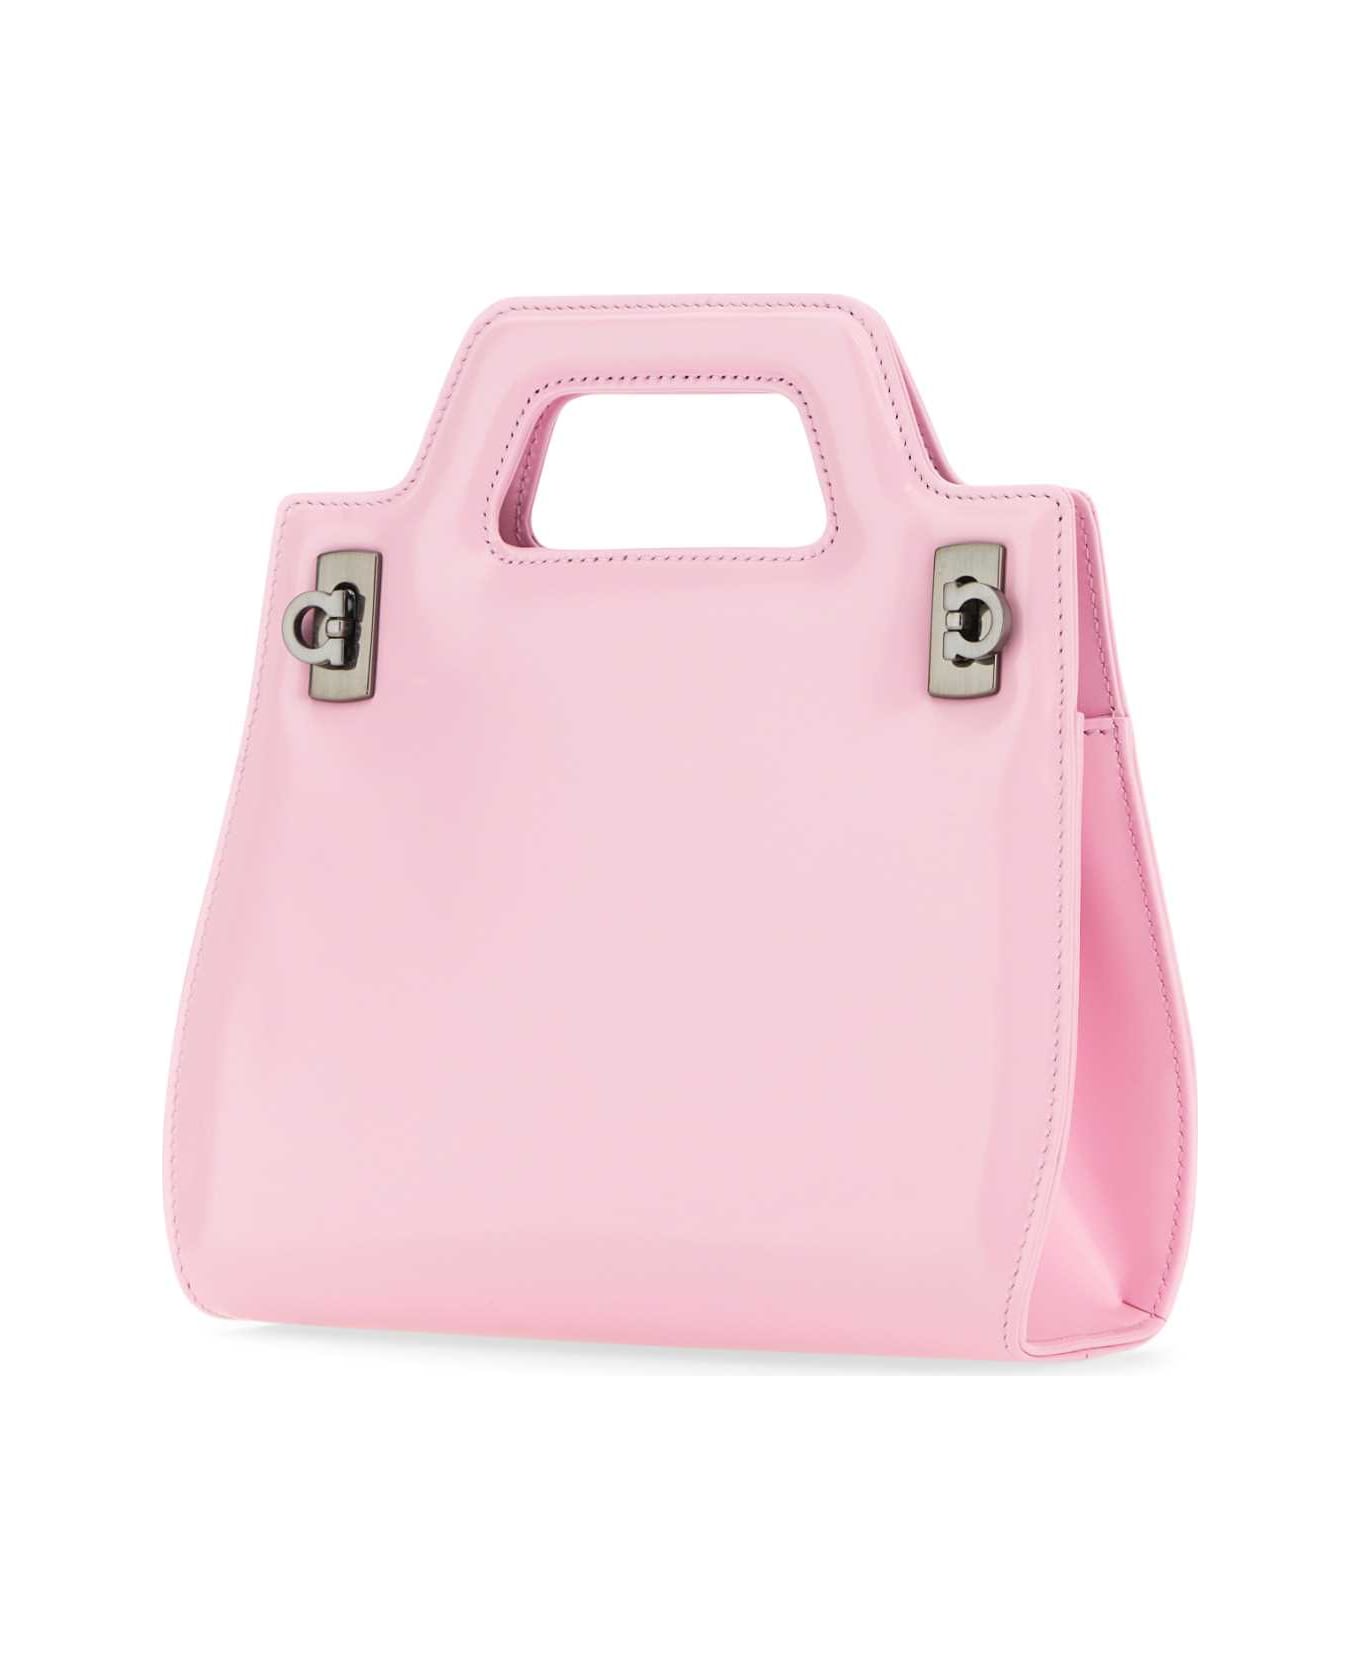 Ferragamo Pink Leather Mini Wanda Handbag - PINK トートバッグ